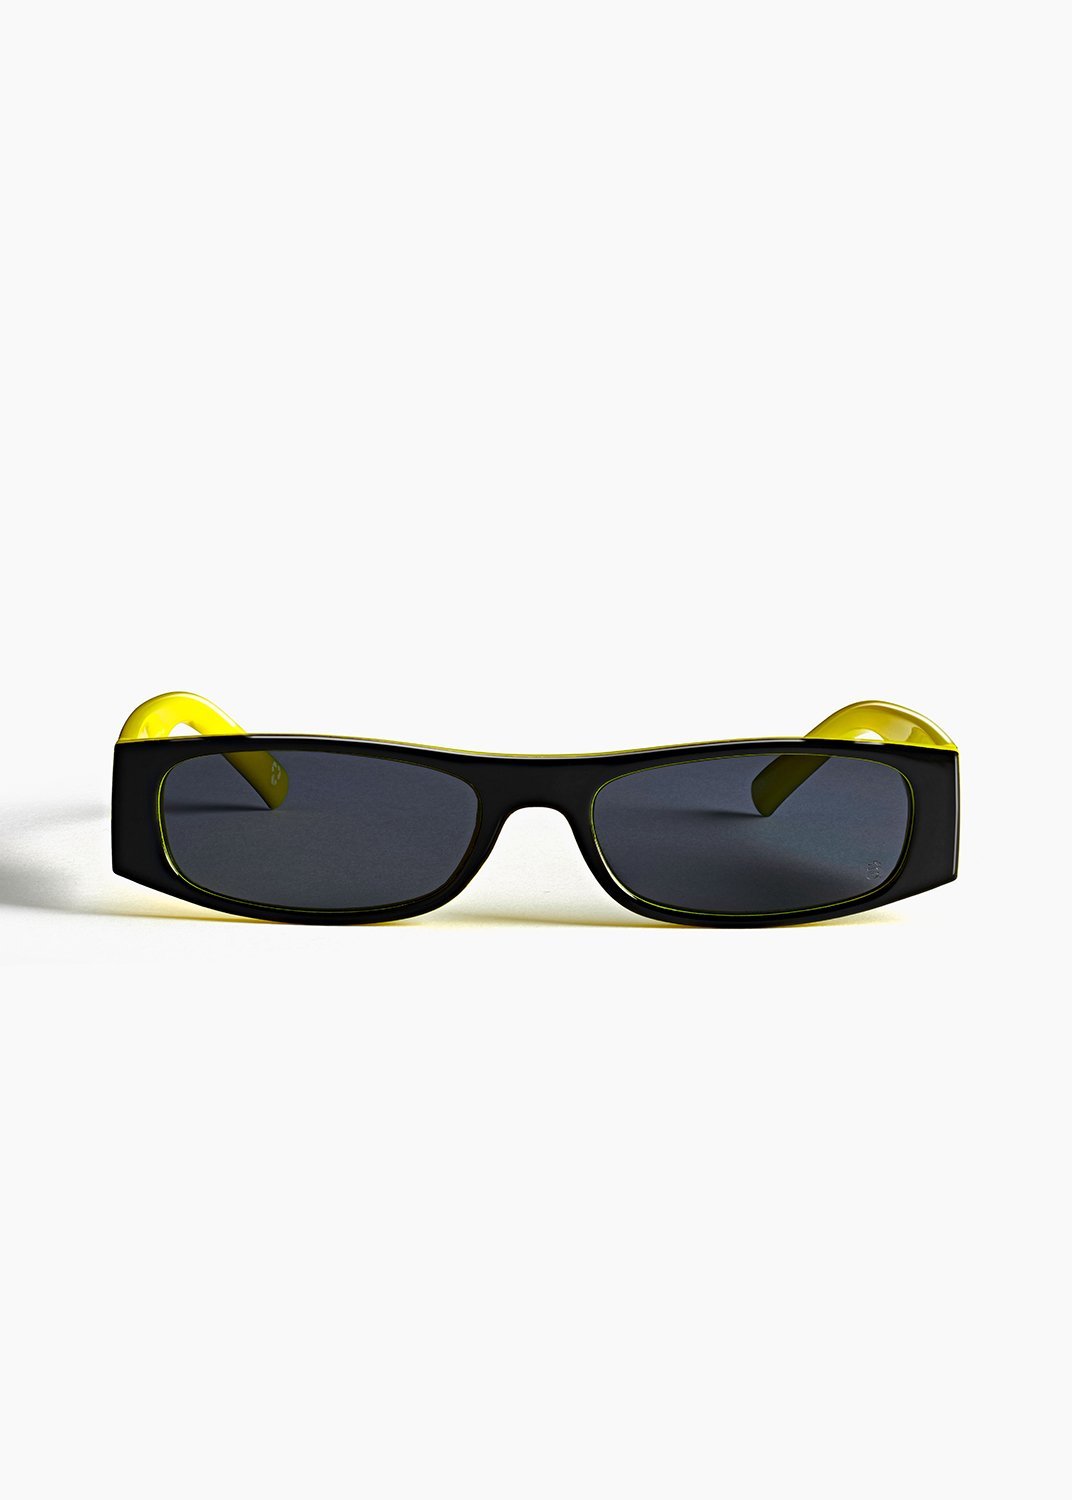 Akira Sunglasses Szade Eyewear 